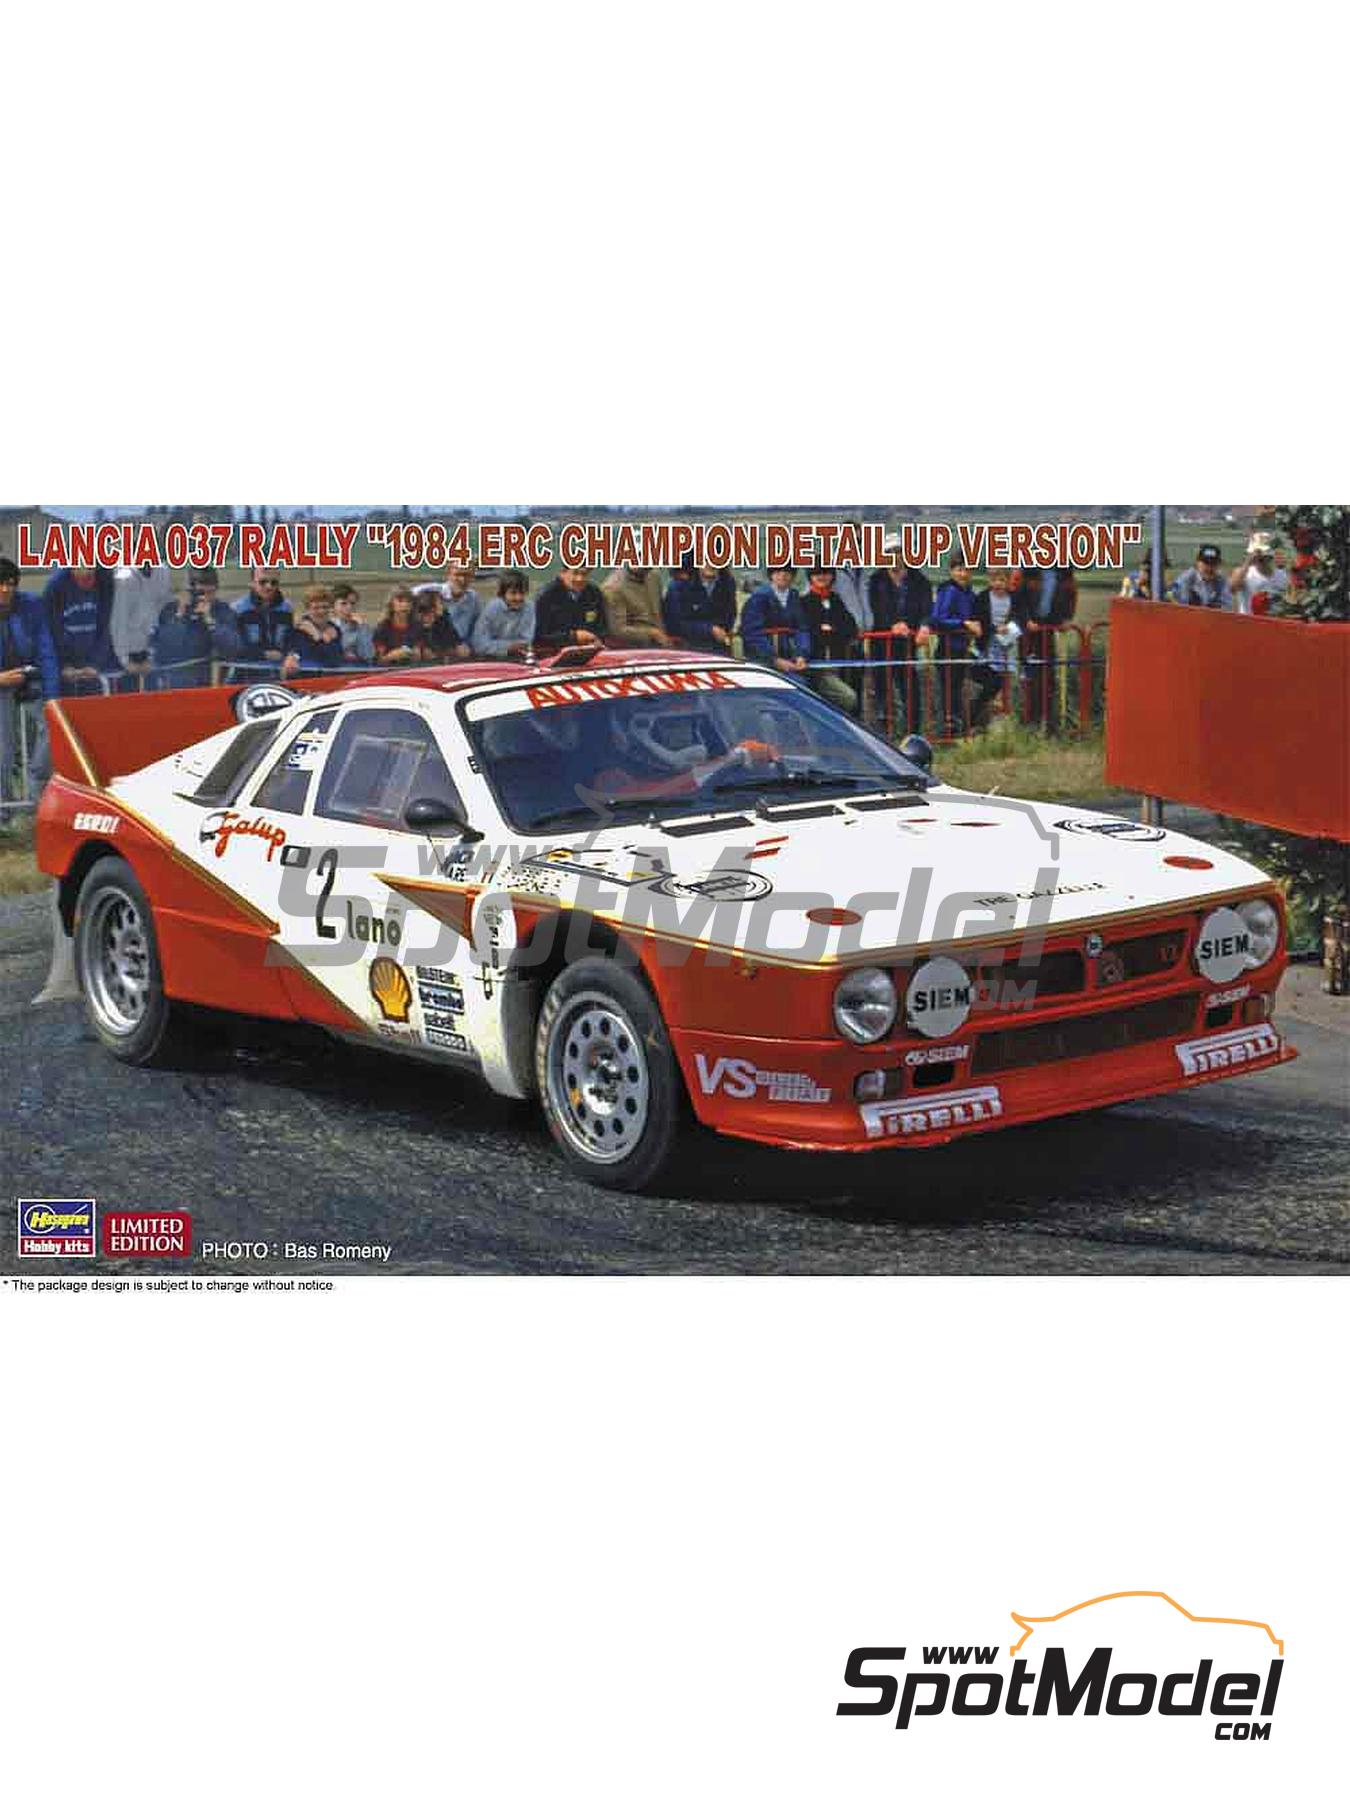 Hasegawa 20299 1/24 Scale Model Rally Car Kit LANCIA 037 WRC 1983 Rallye SANREMO for sale online 